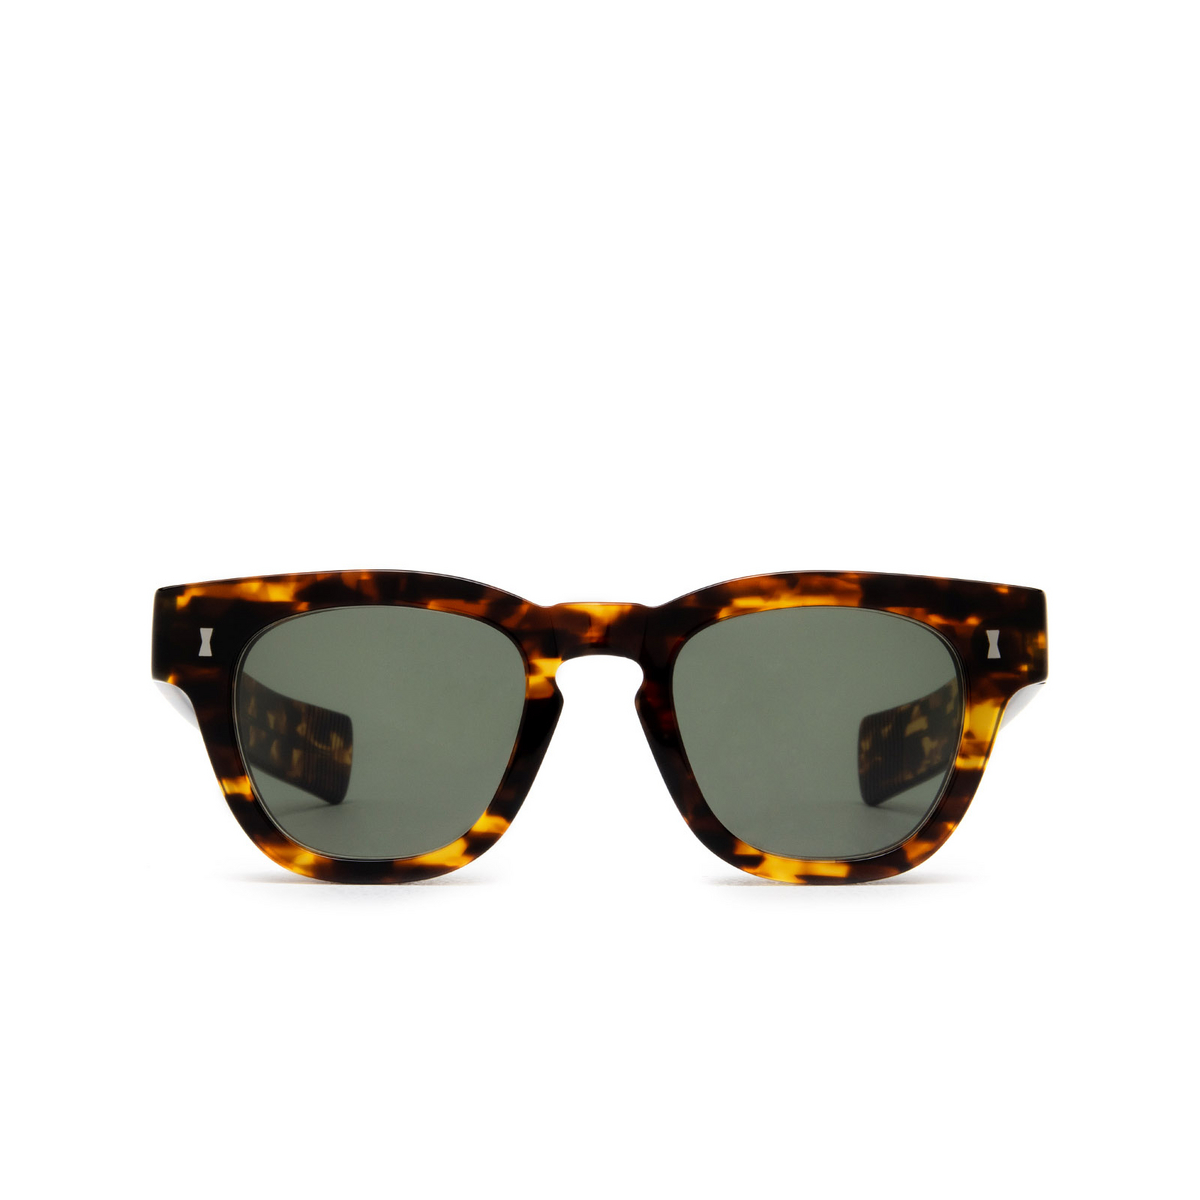 Cubitts CRUIKSHANK Sunglasses CRU-R-LIG Light Turtle - front view